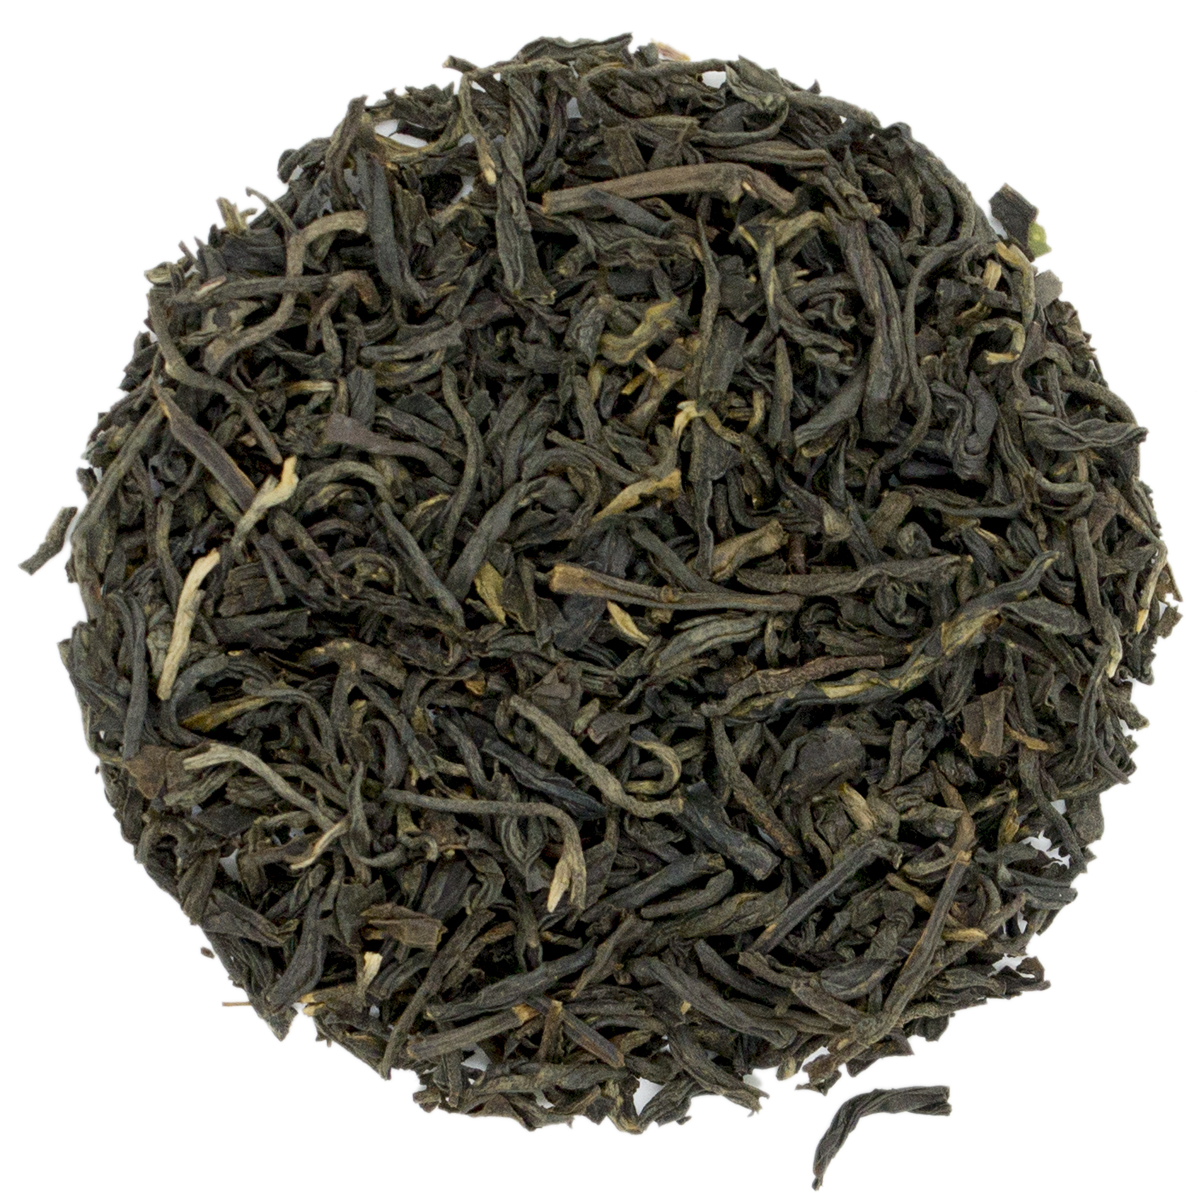 Купить чай в туле. Дянь Хун Мао фэн. Дянь Хун чай. Чай Дянь Хун плитка. Красный китайский чай.